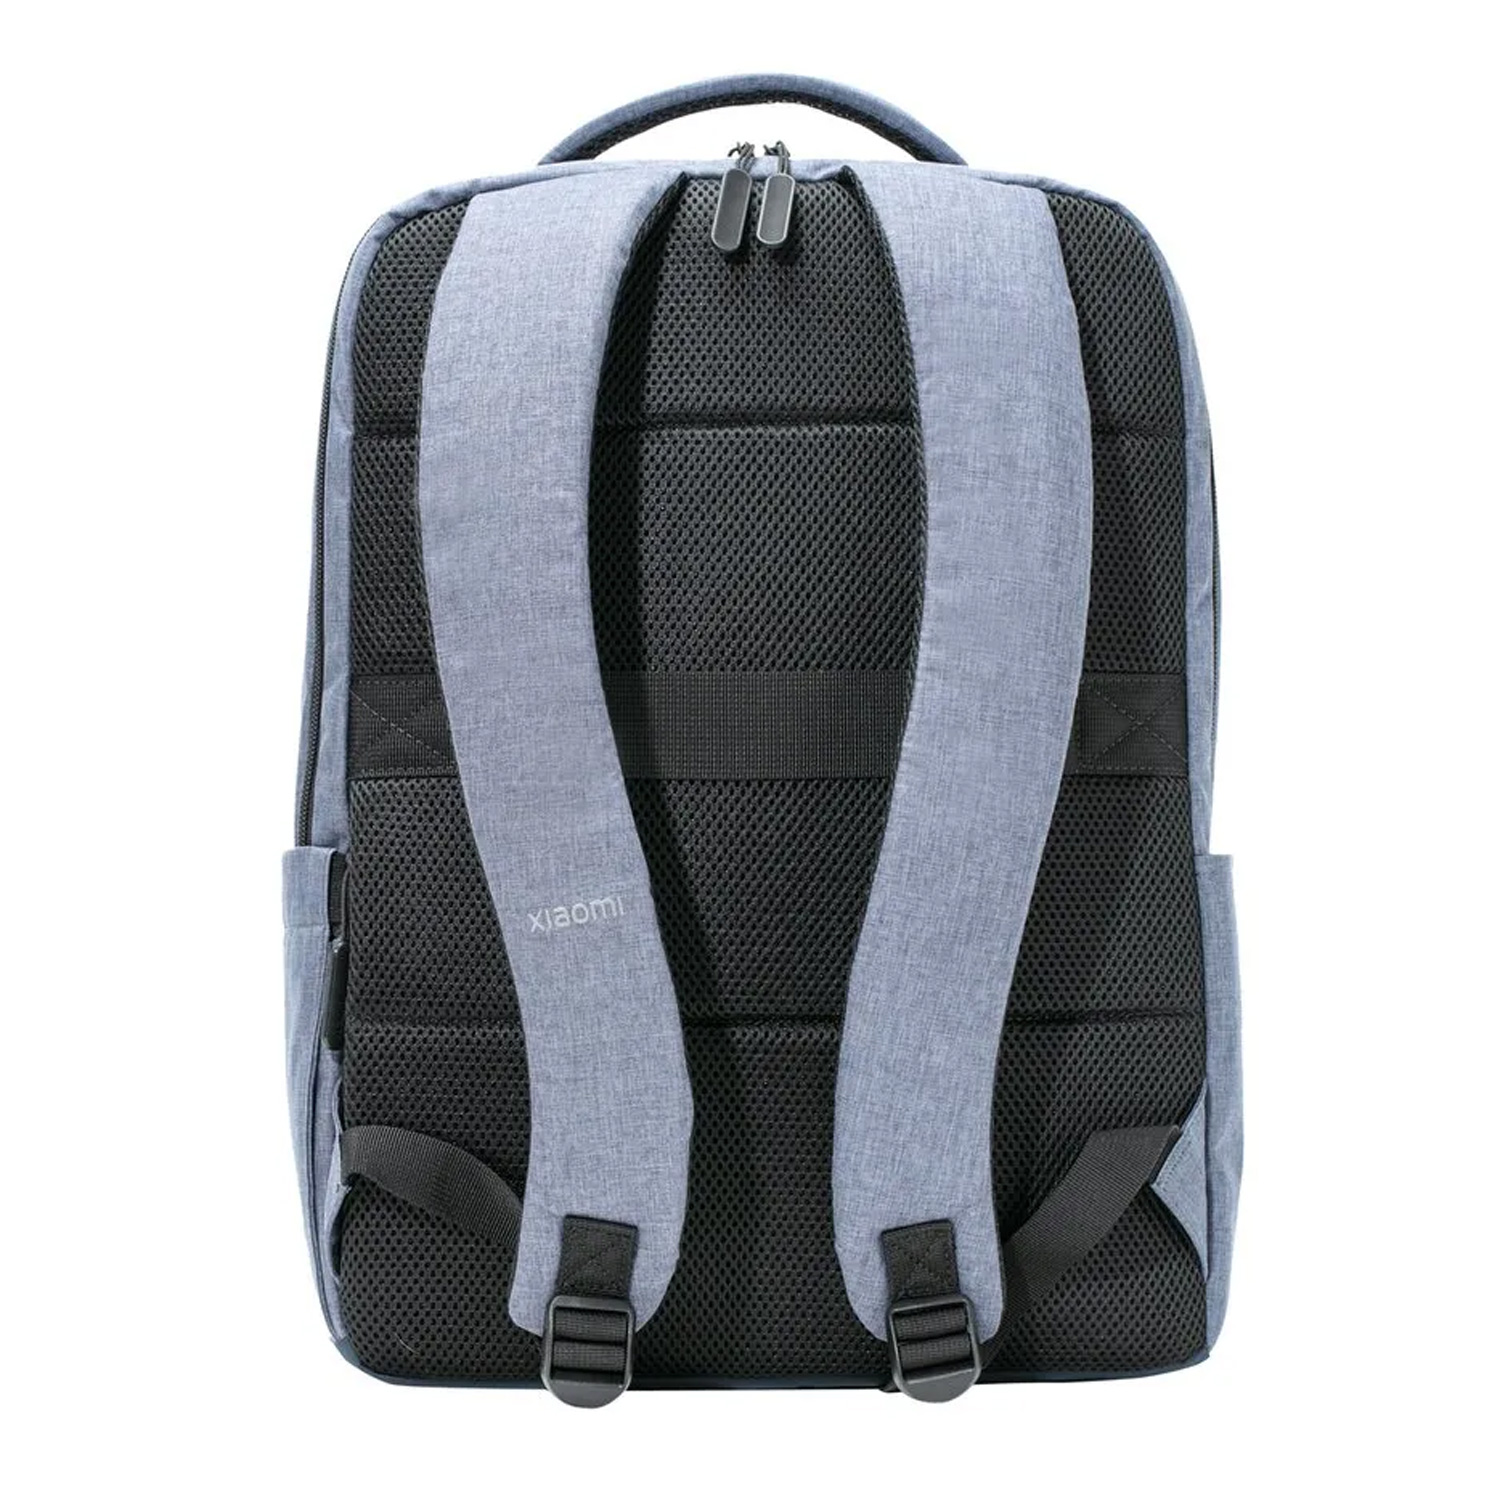 Mochila Xiaomi Commuter Backpack XDLGX-04 - Light Blue